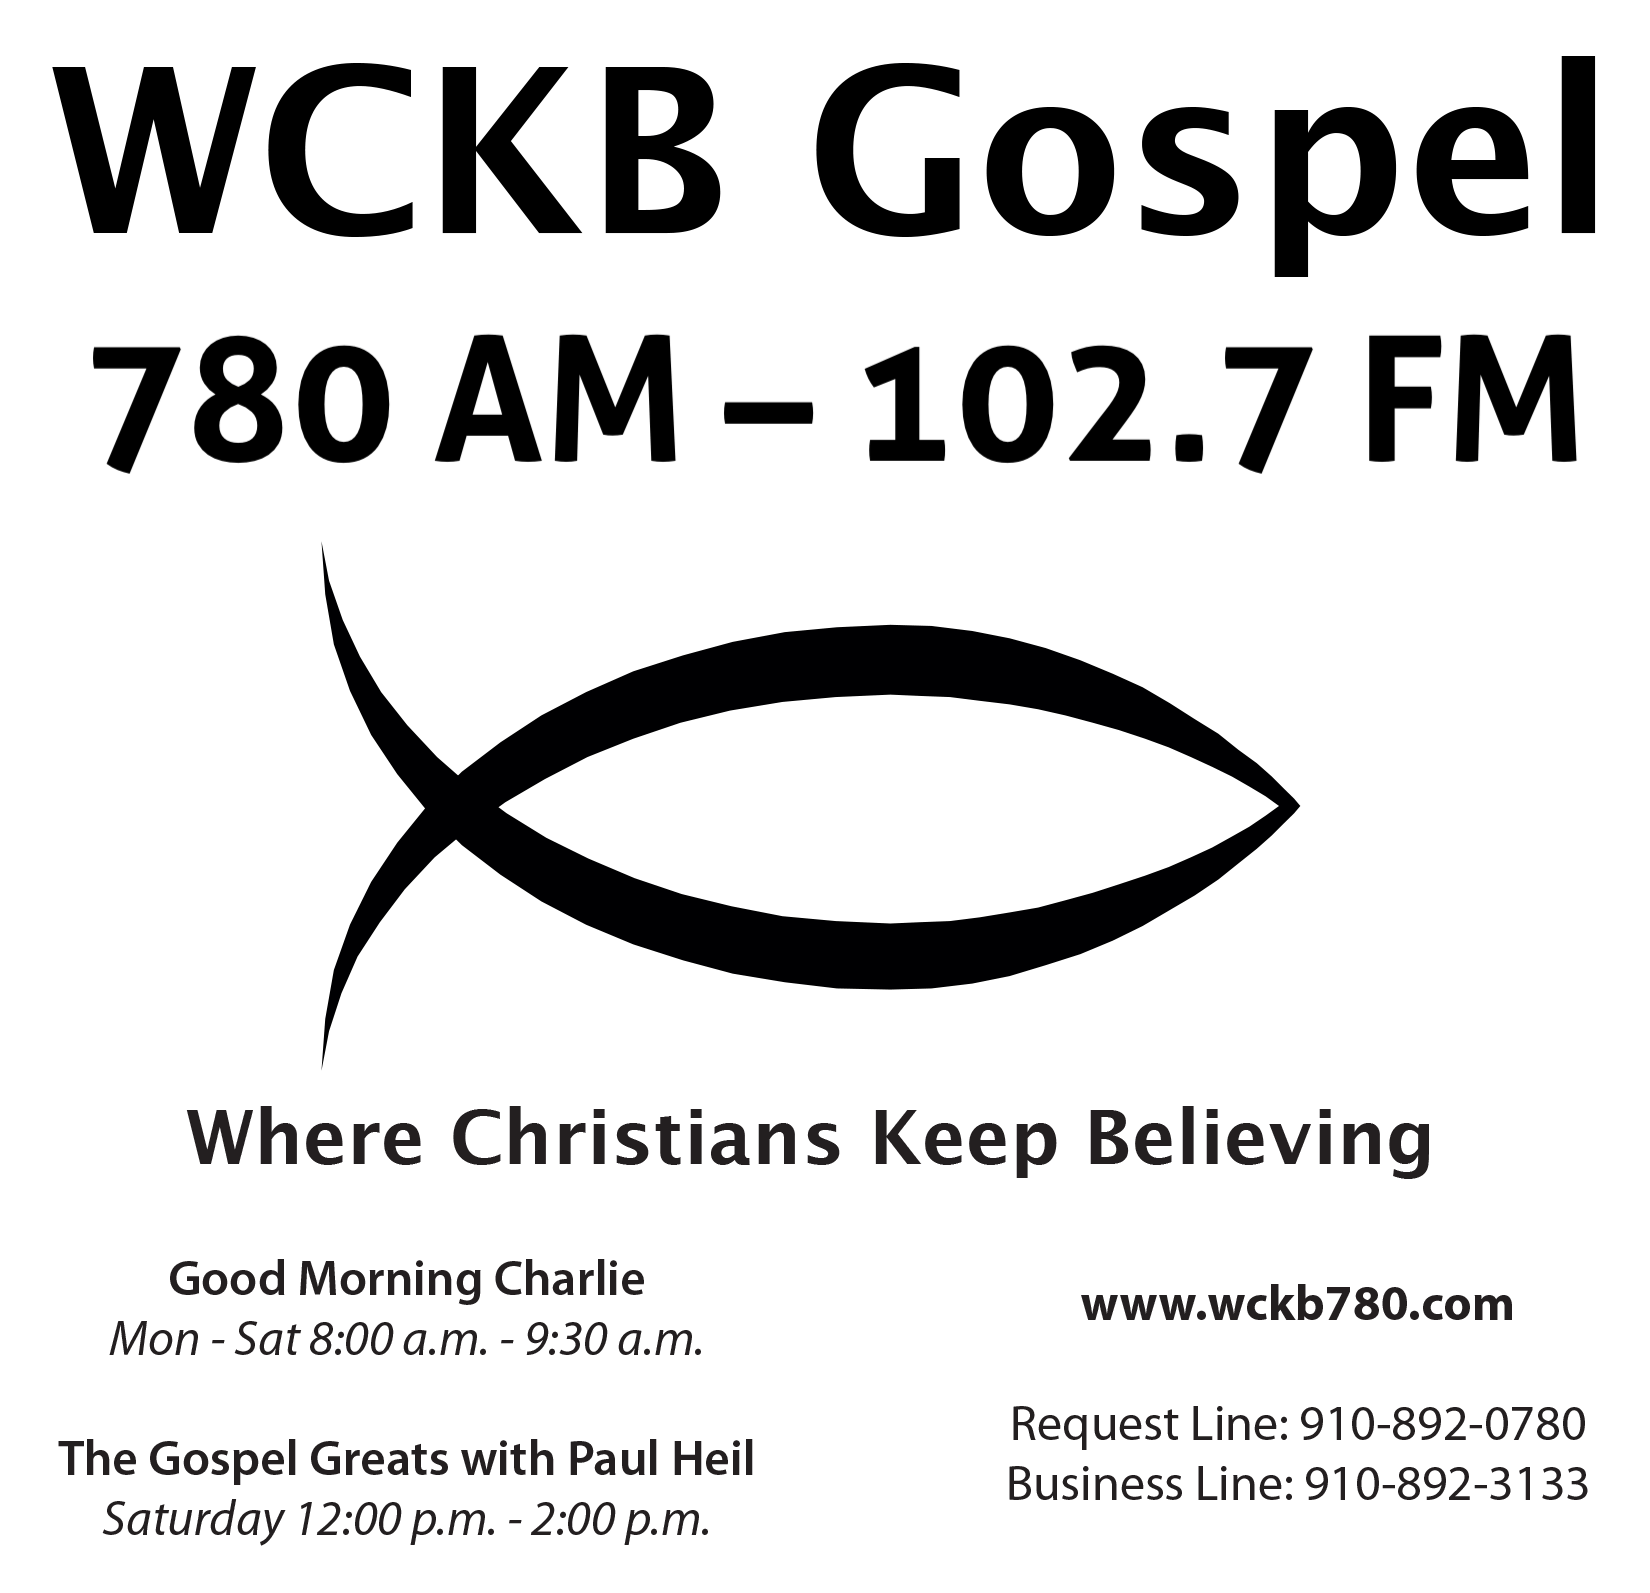 WCKB Gospel 780 AM - 102.7 FM